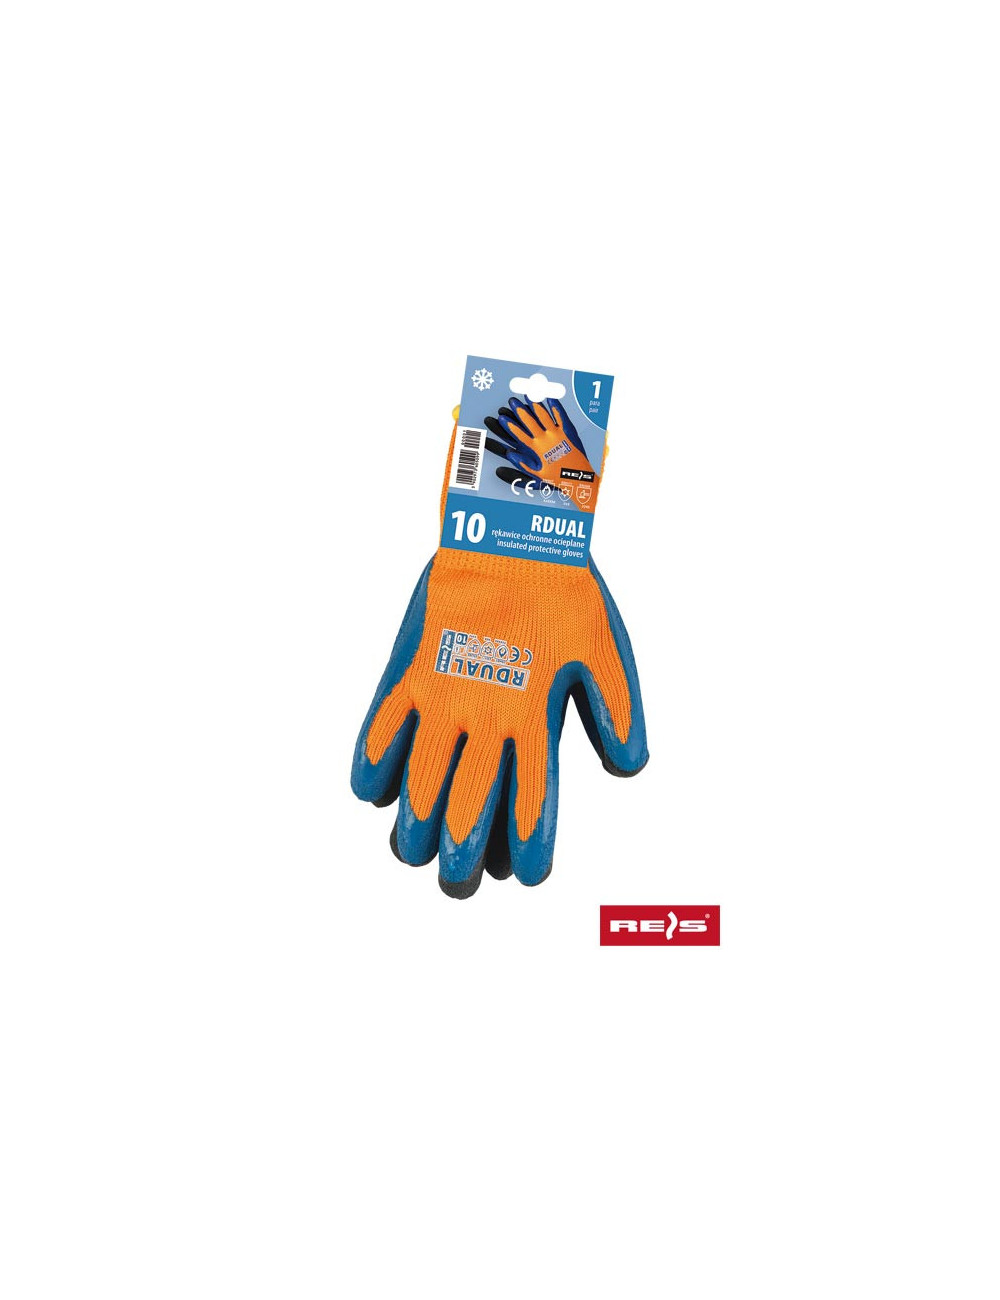 Protective gloves rdual-s pnb orange-blue-black Reis